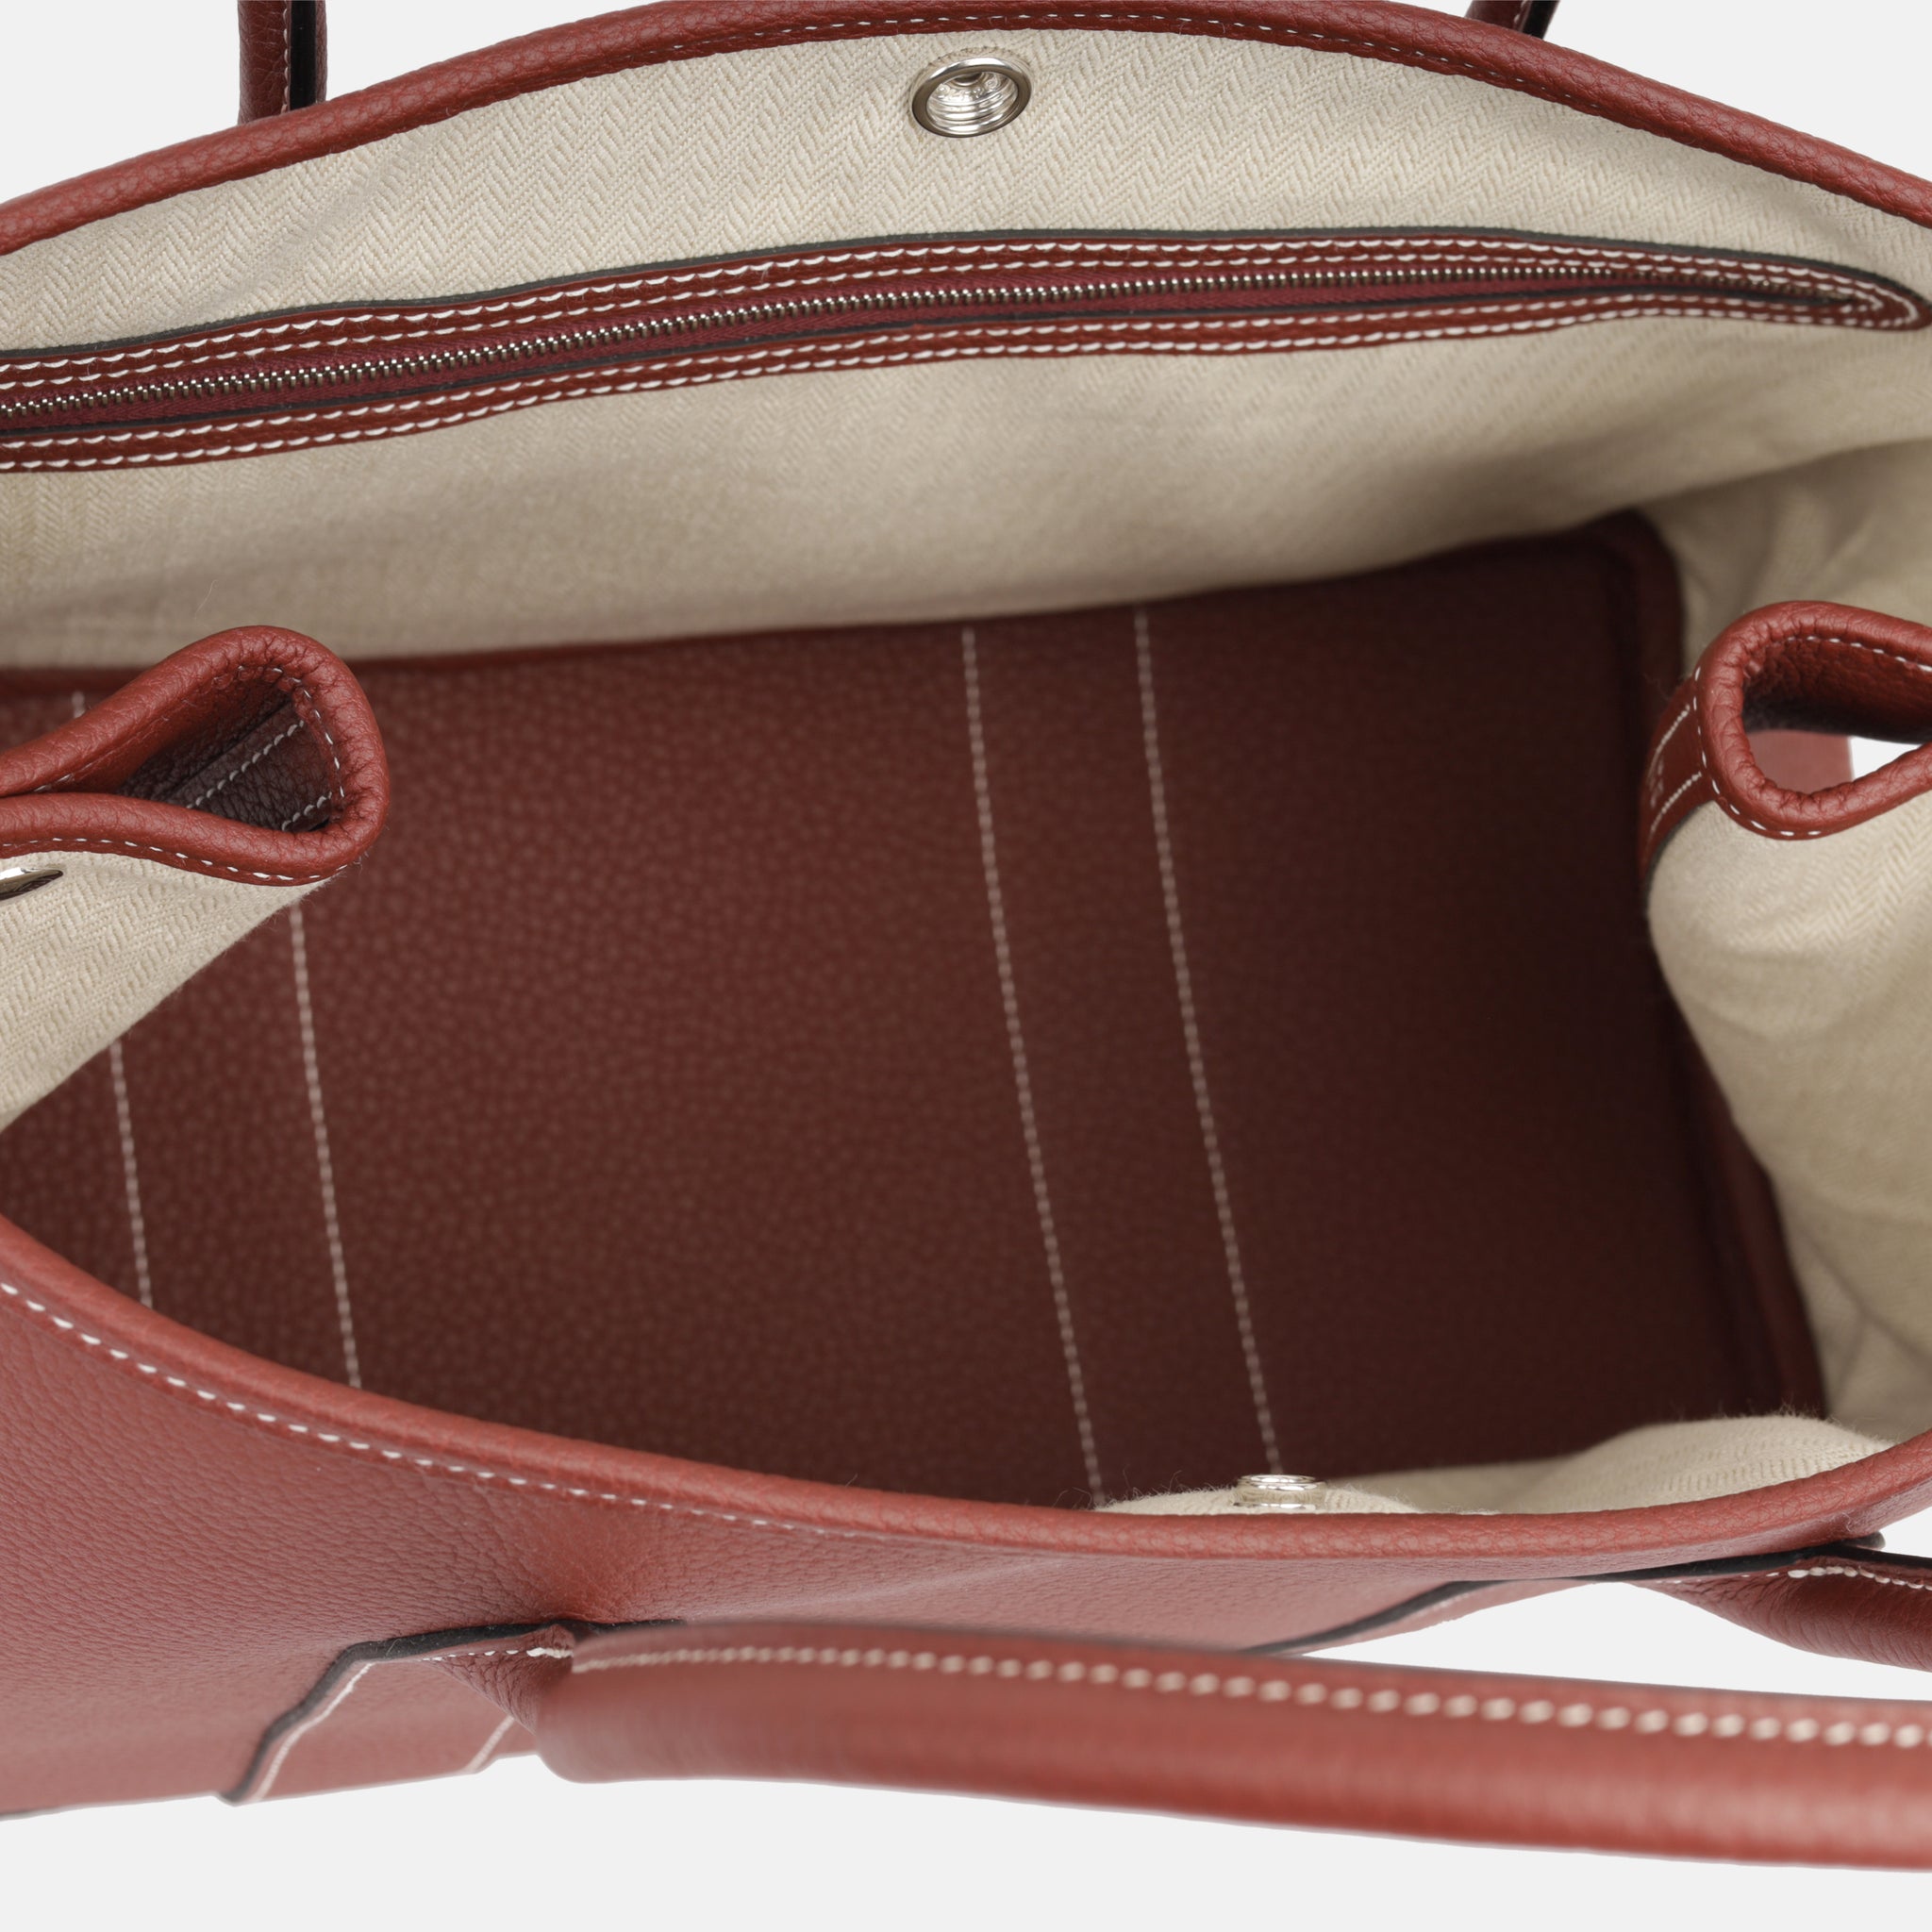 Hermès - Garden Party 36 - Rouge H Negonda Leather - PHW - Brand New